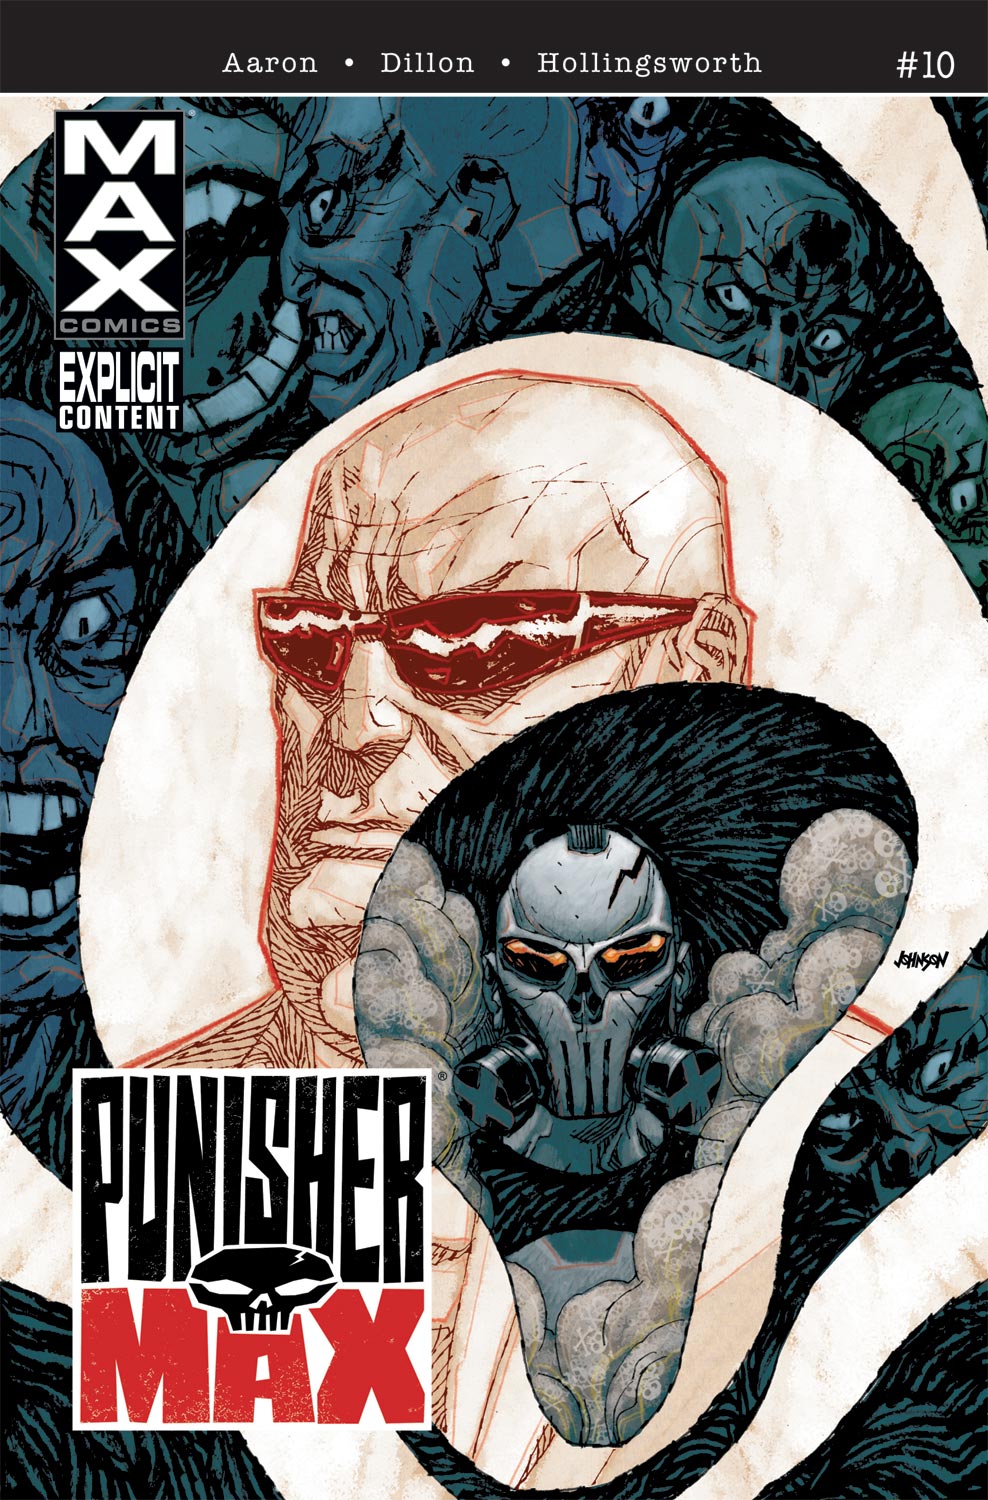 Punishermax (2009) #10